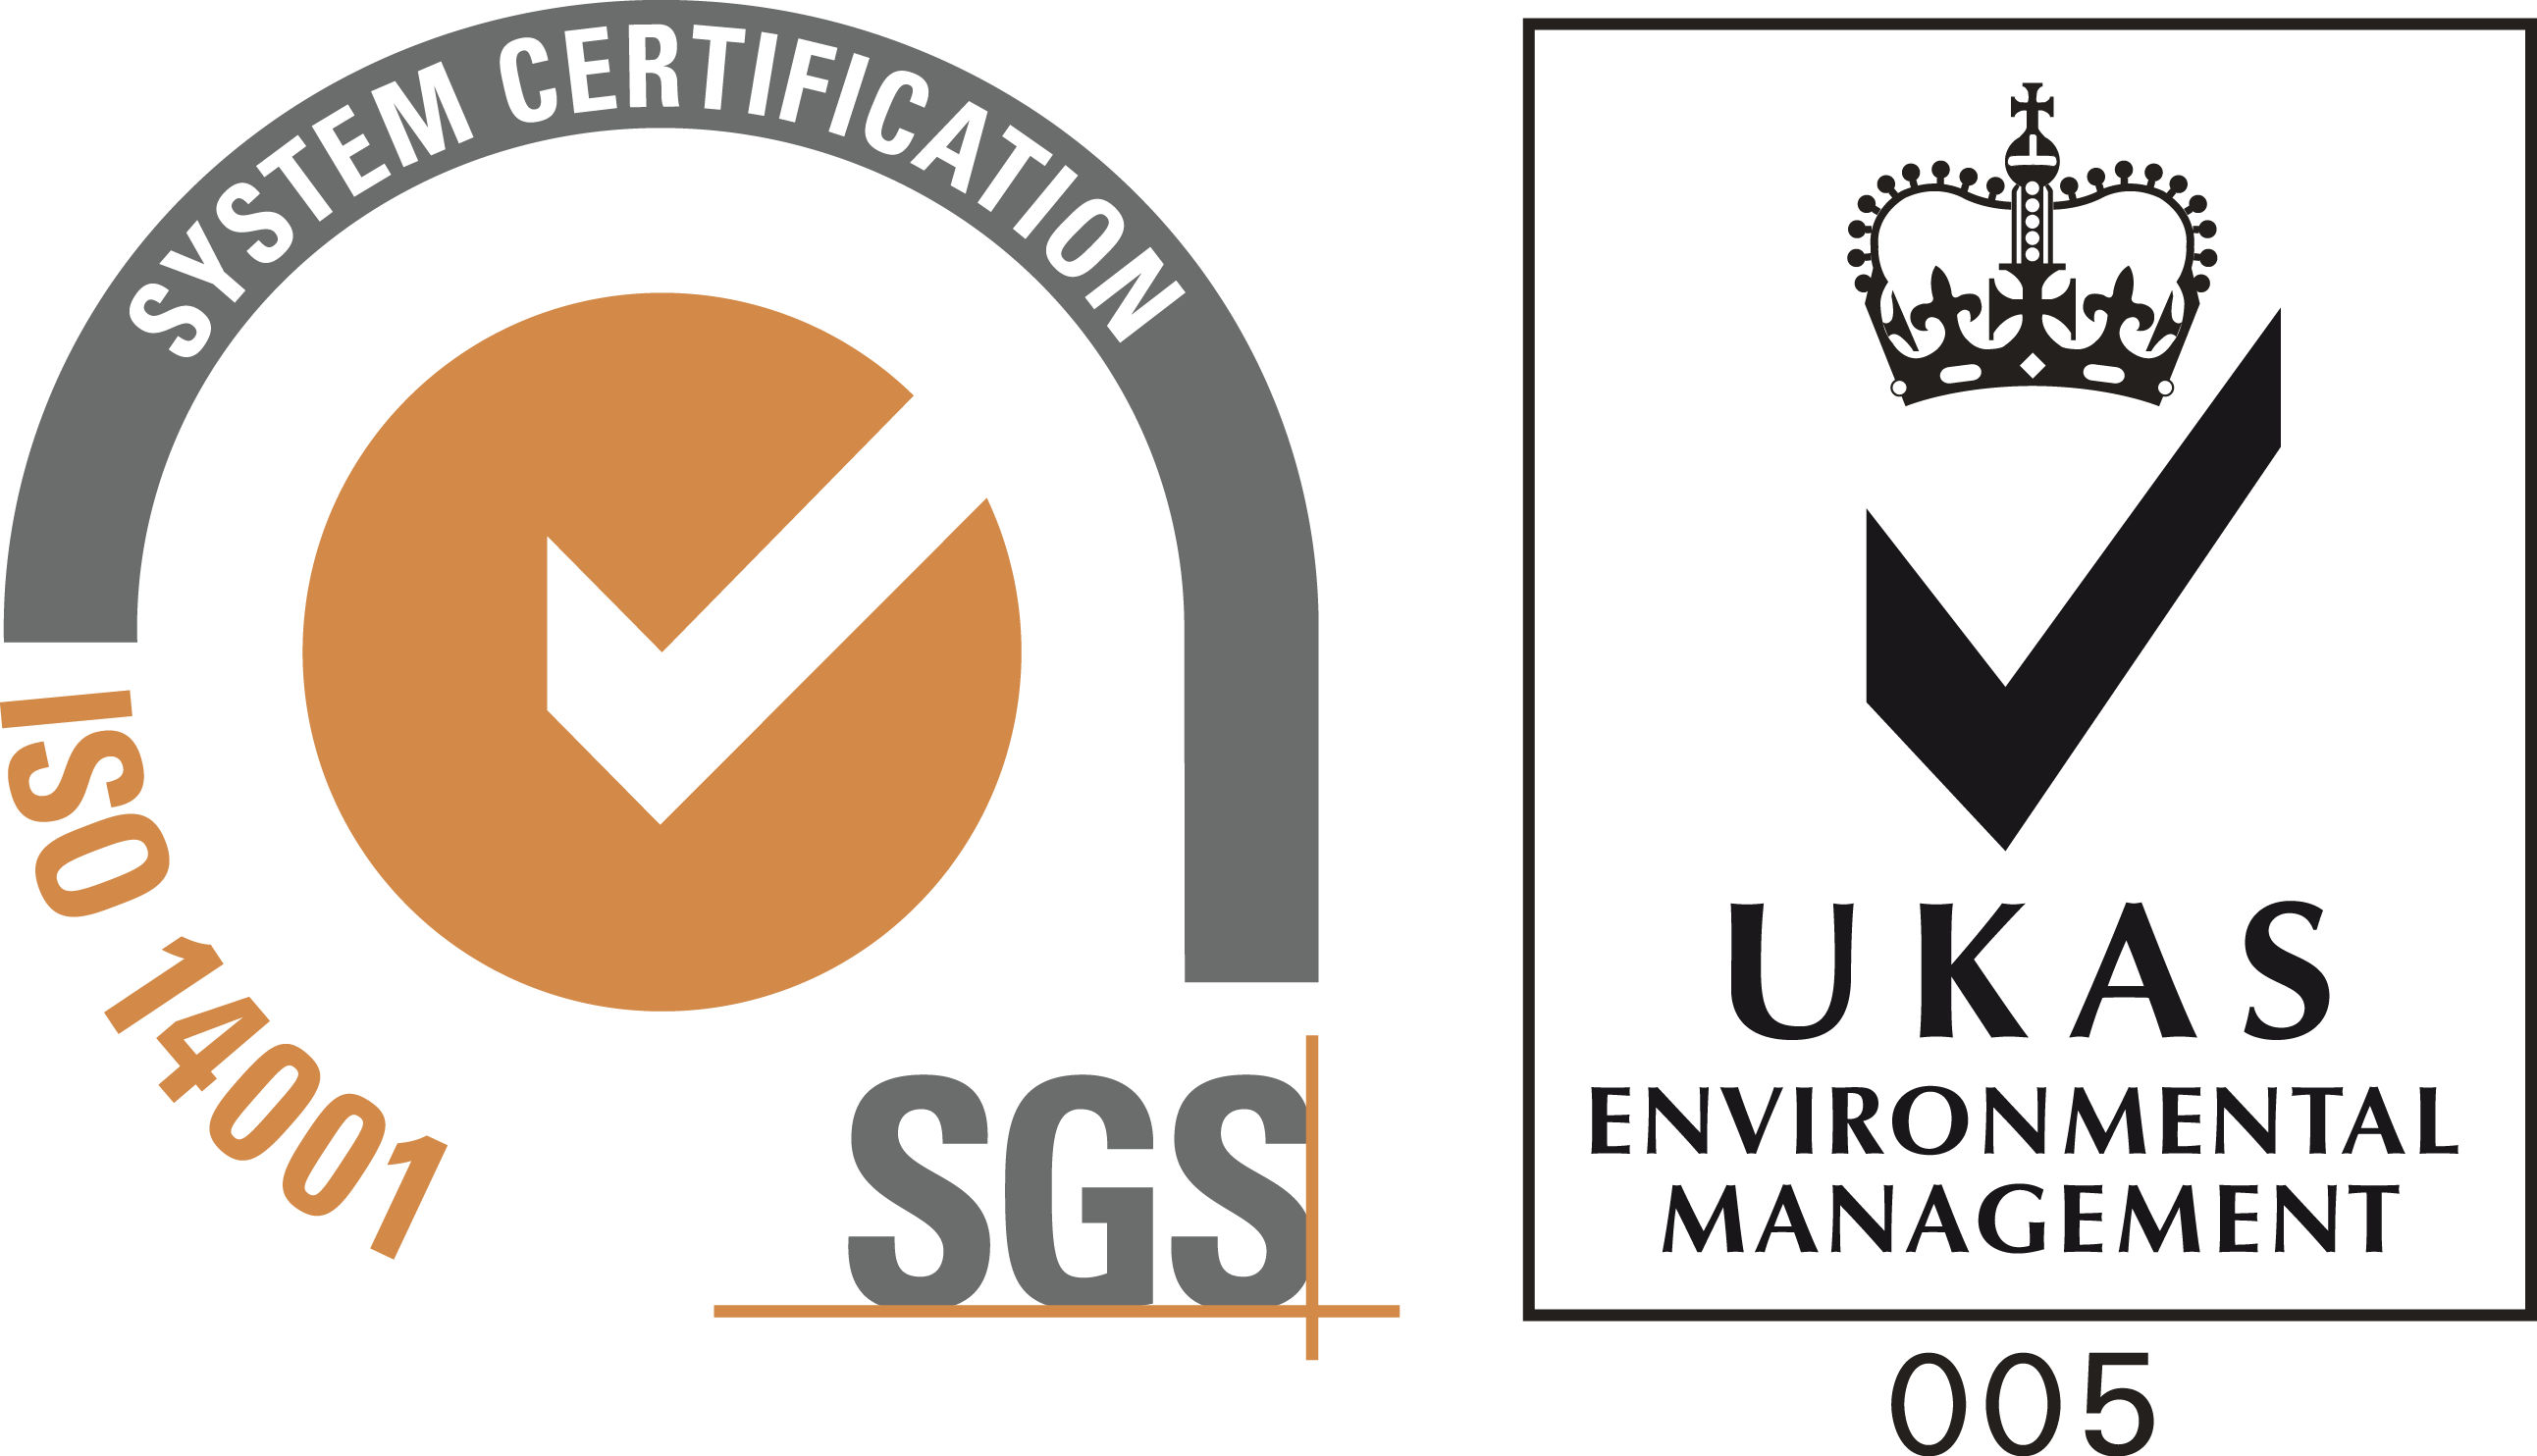 ISO 9001 Logo - Download HD Iso 14001 Logo sgs Ukas